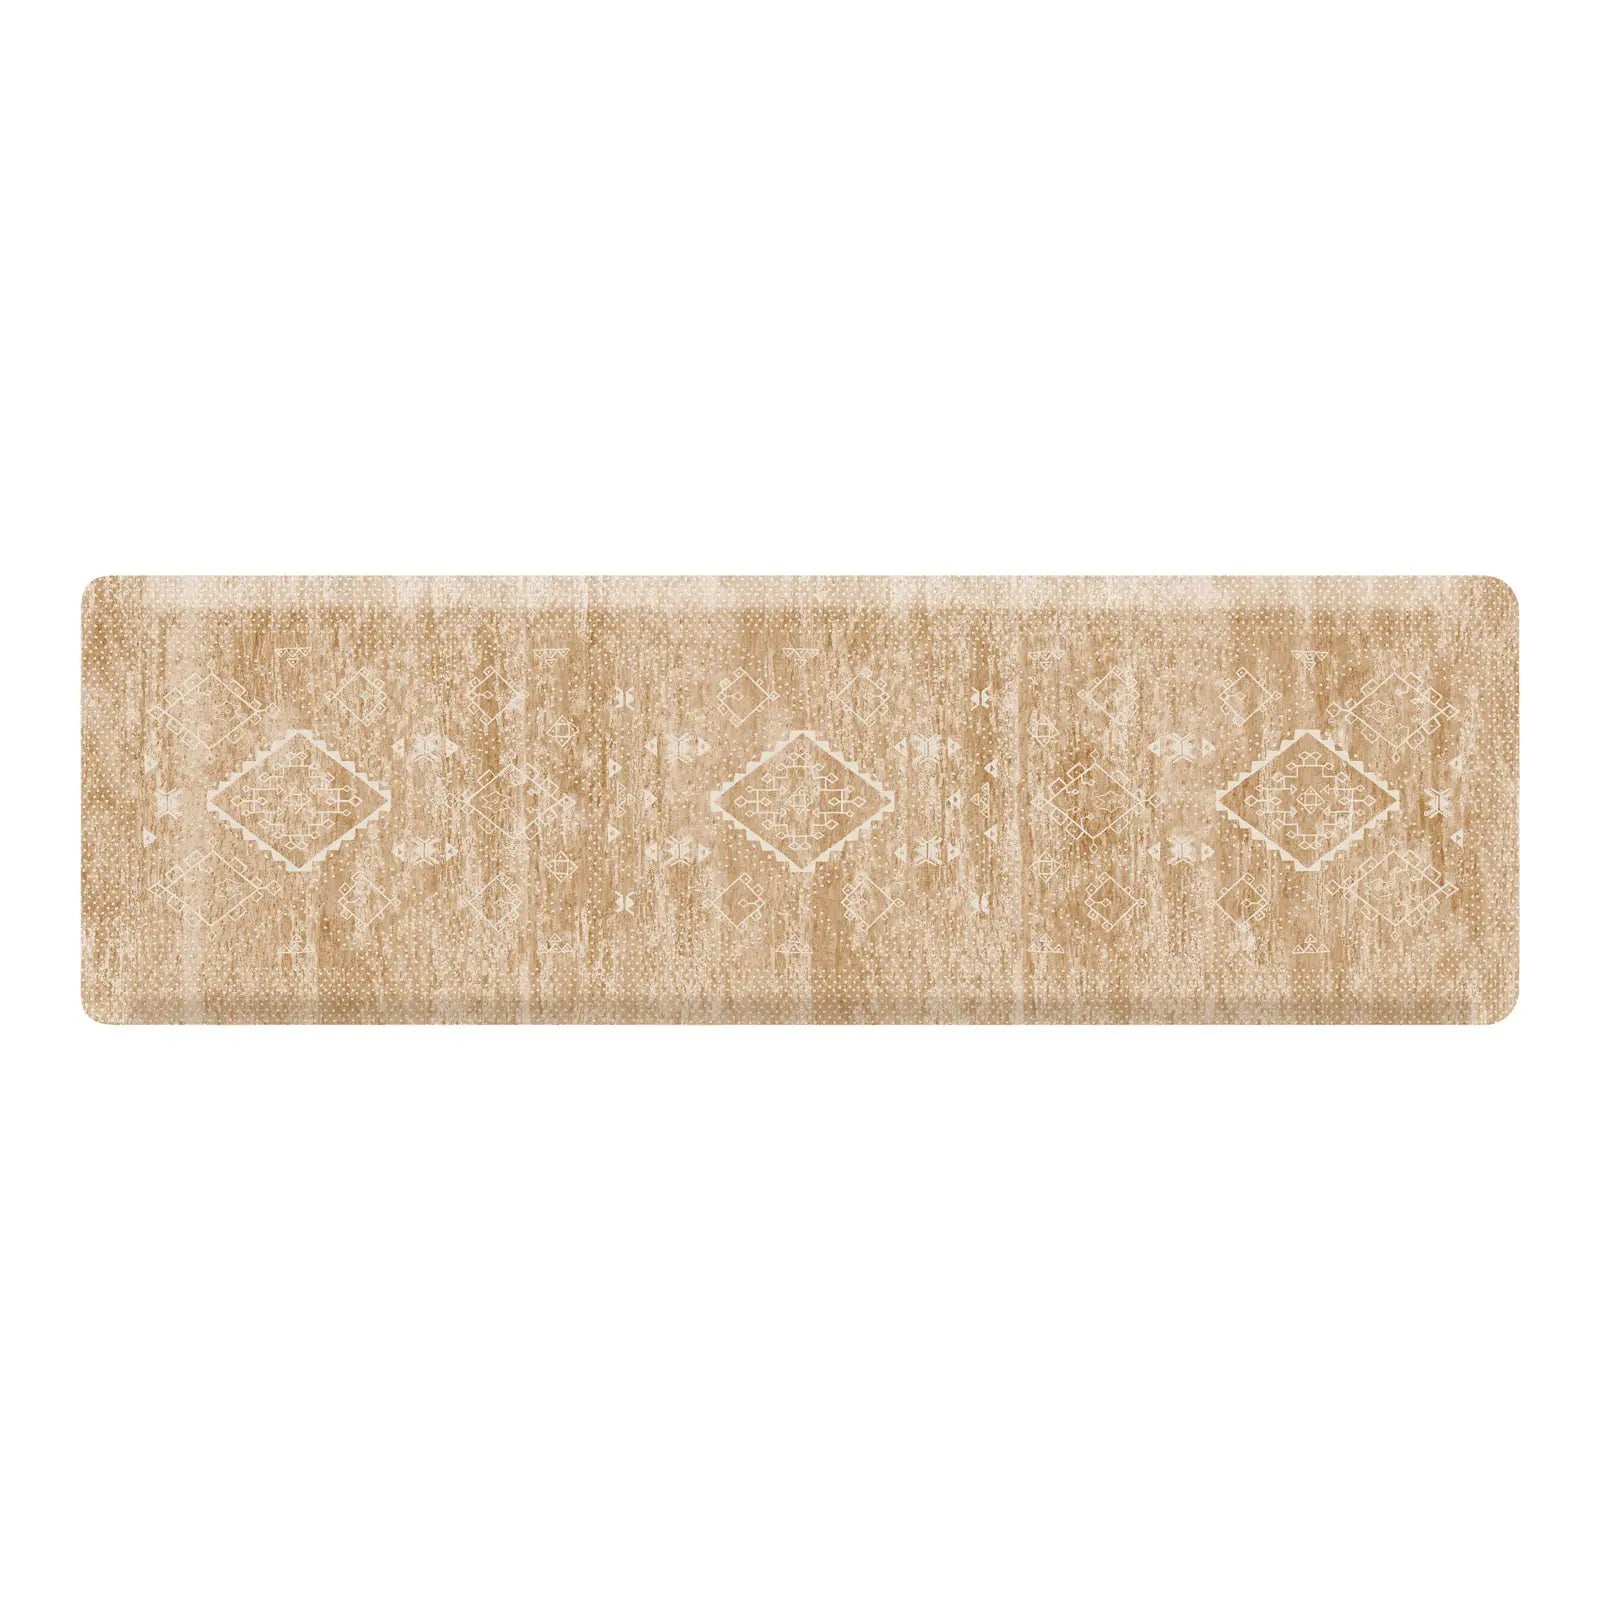 Ula Amber brown minimal boho pattern kitchen mat in size 22x72